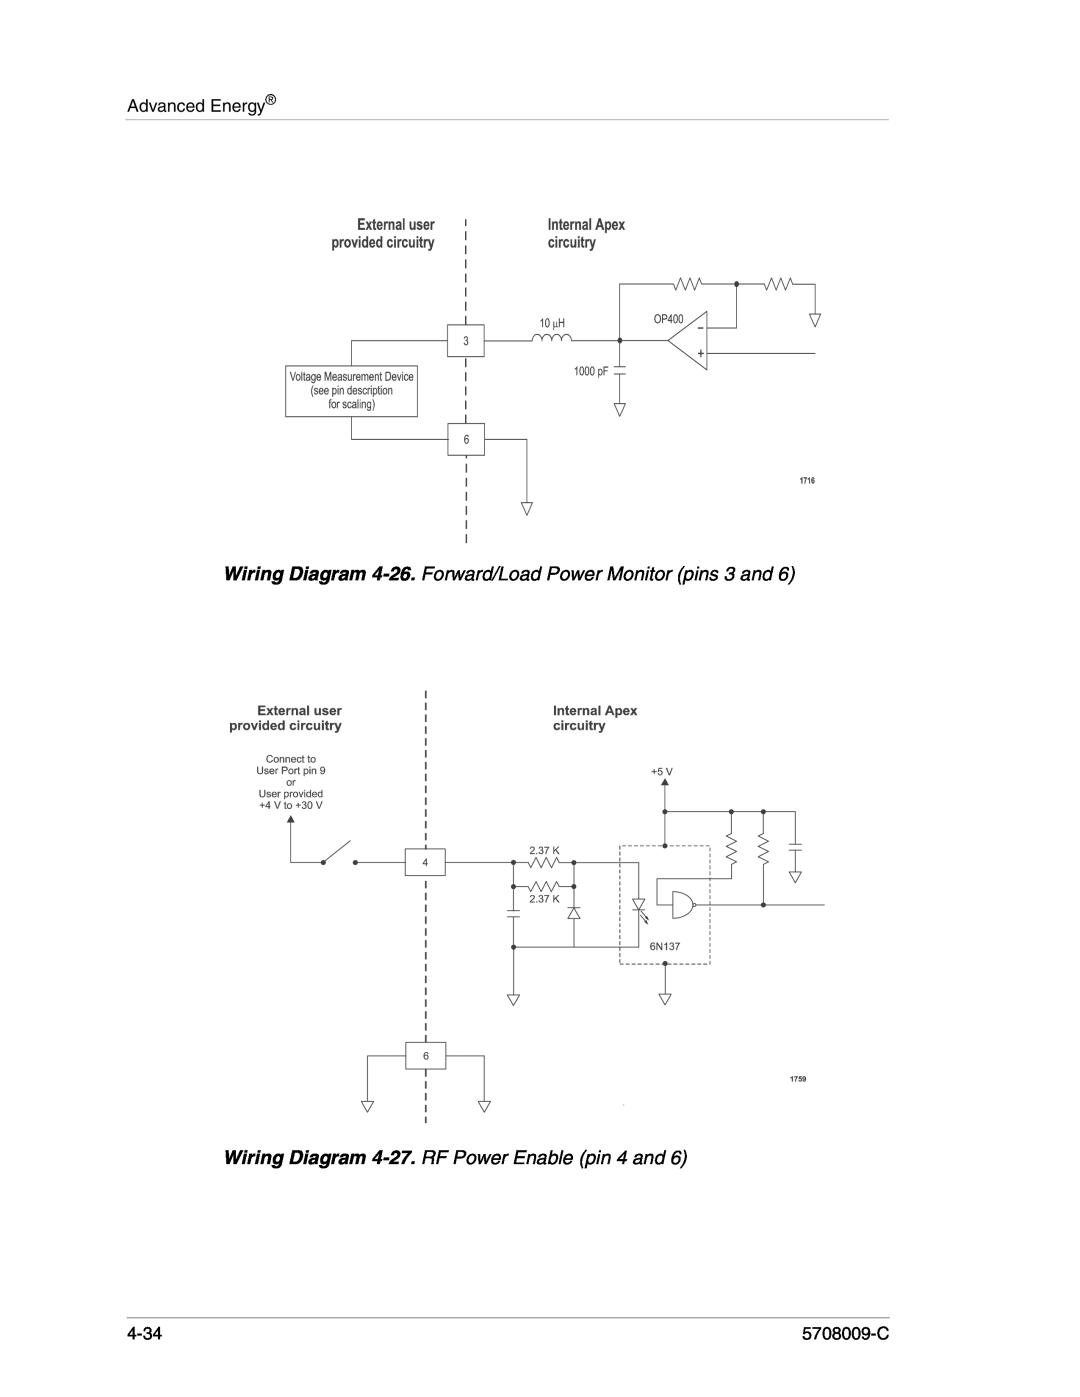 Apex Digital 5708009-C manual Wiring Diagram 4-26. Forward/Load Power Monitor pins 3 and, Advanced Energy, 4-34 